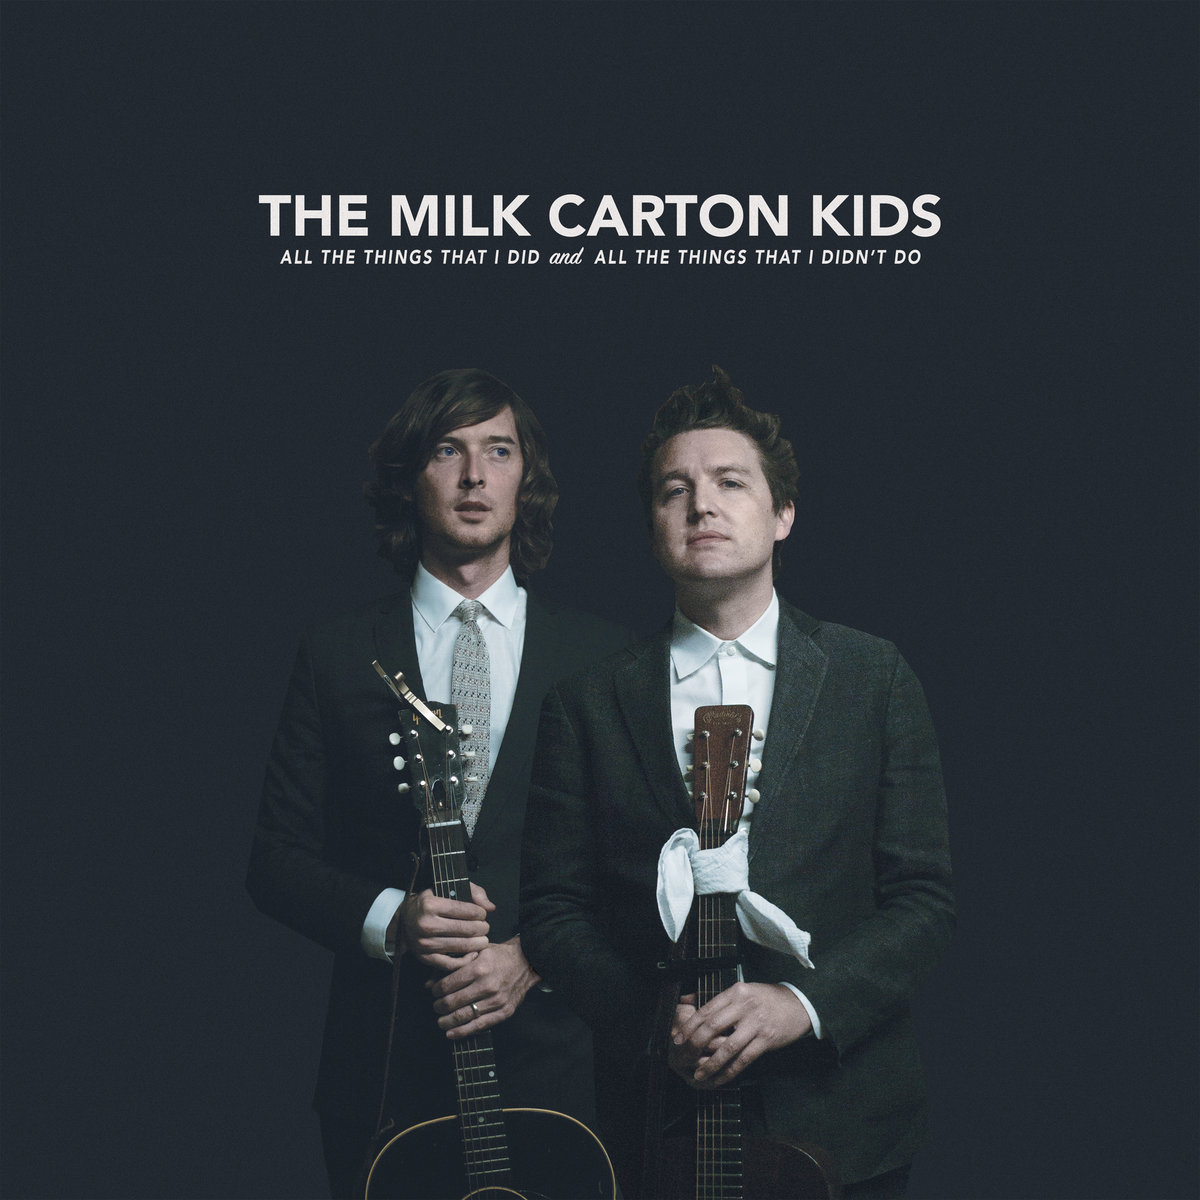 The Milk Carton Kids - cover art